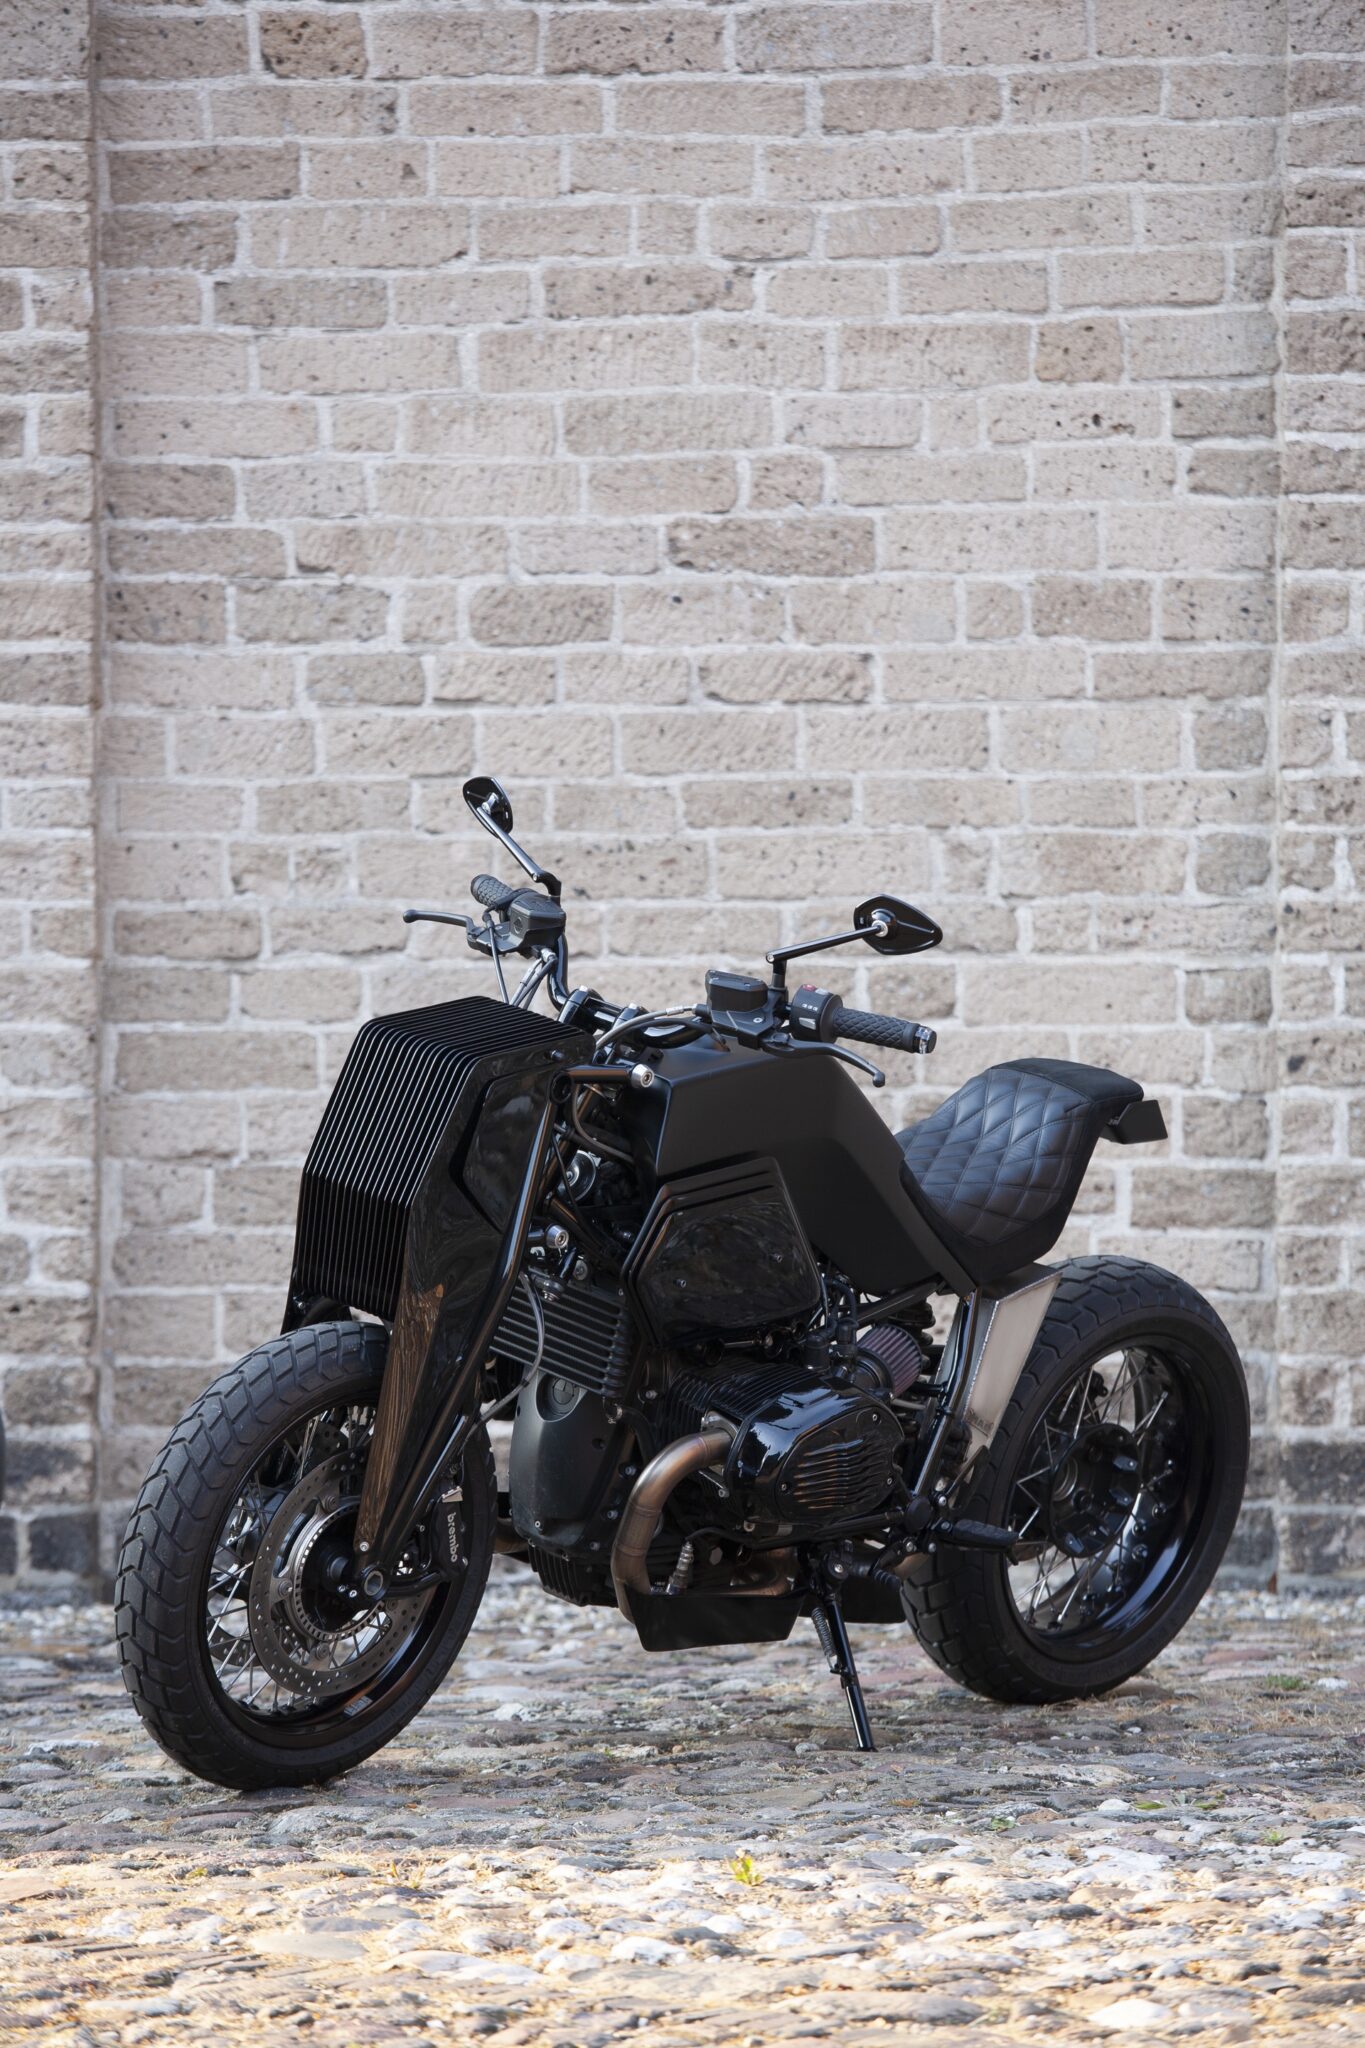 Moto Adonis BMW R nineT Girder custom motorcycle in front of brick wall